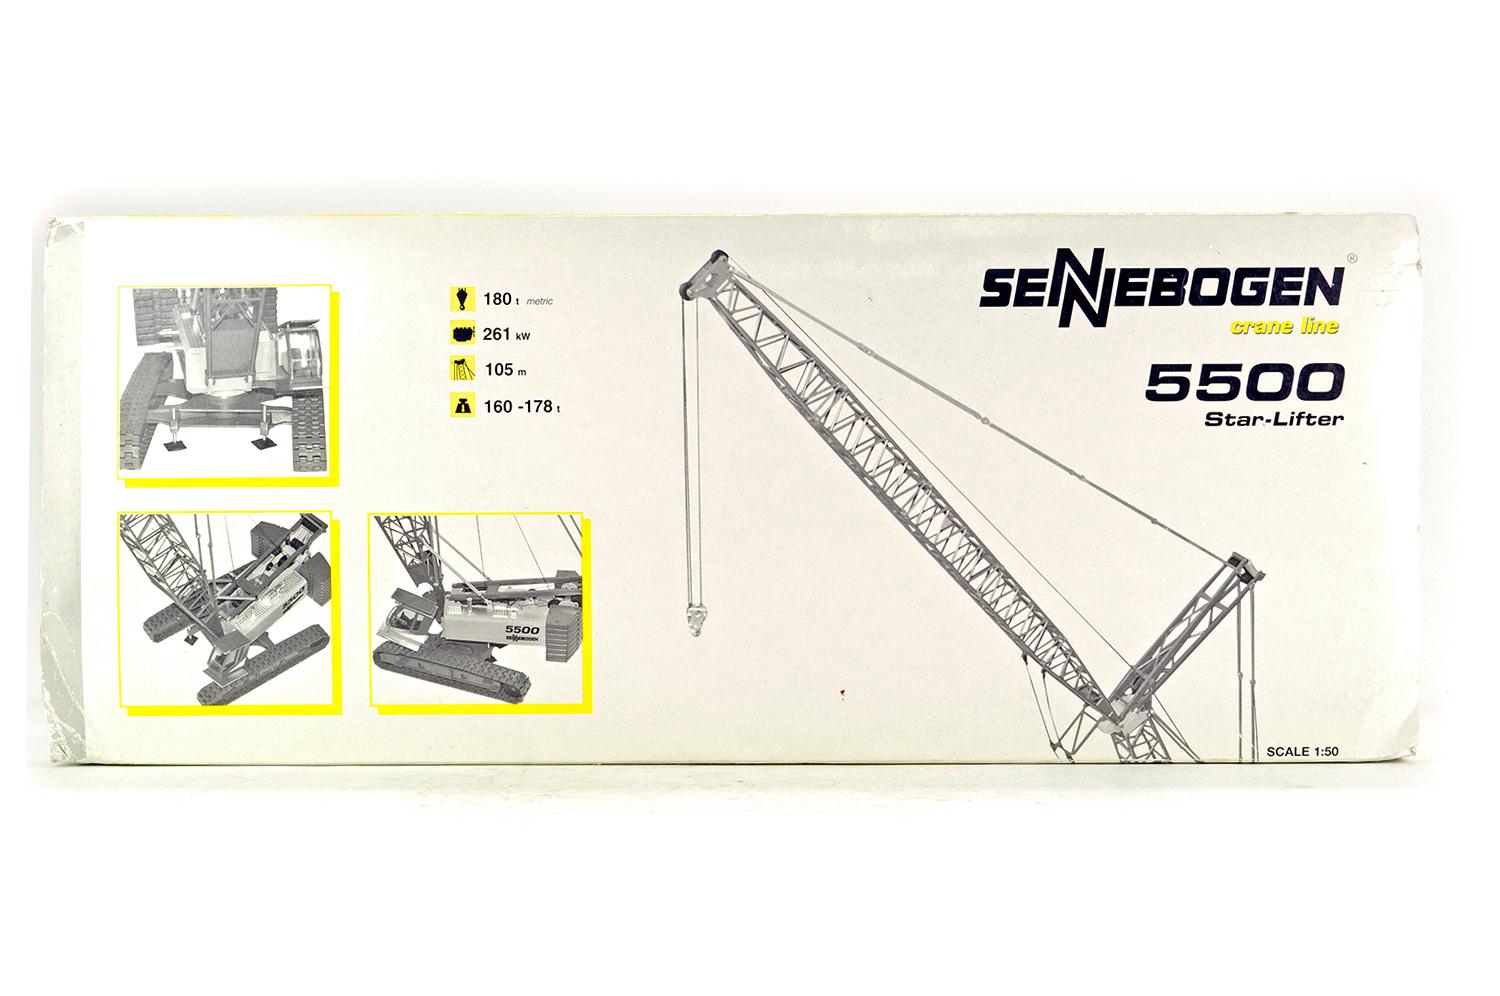 Sennebogen Starlifter 5500 Tracked Crane w/Metal Tracks